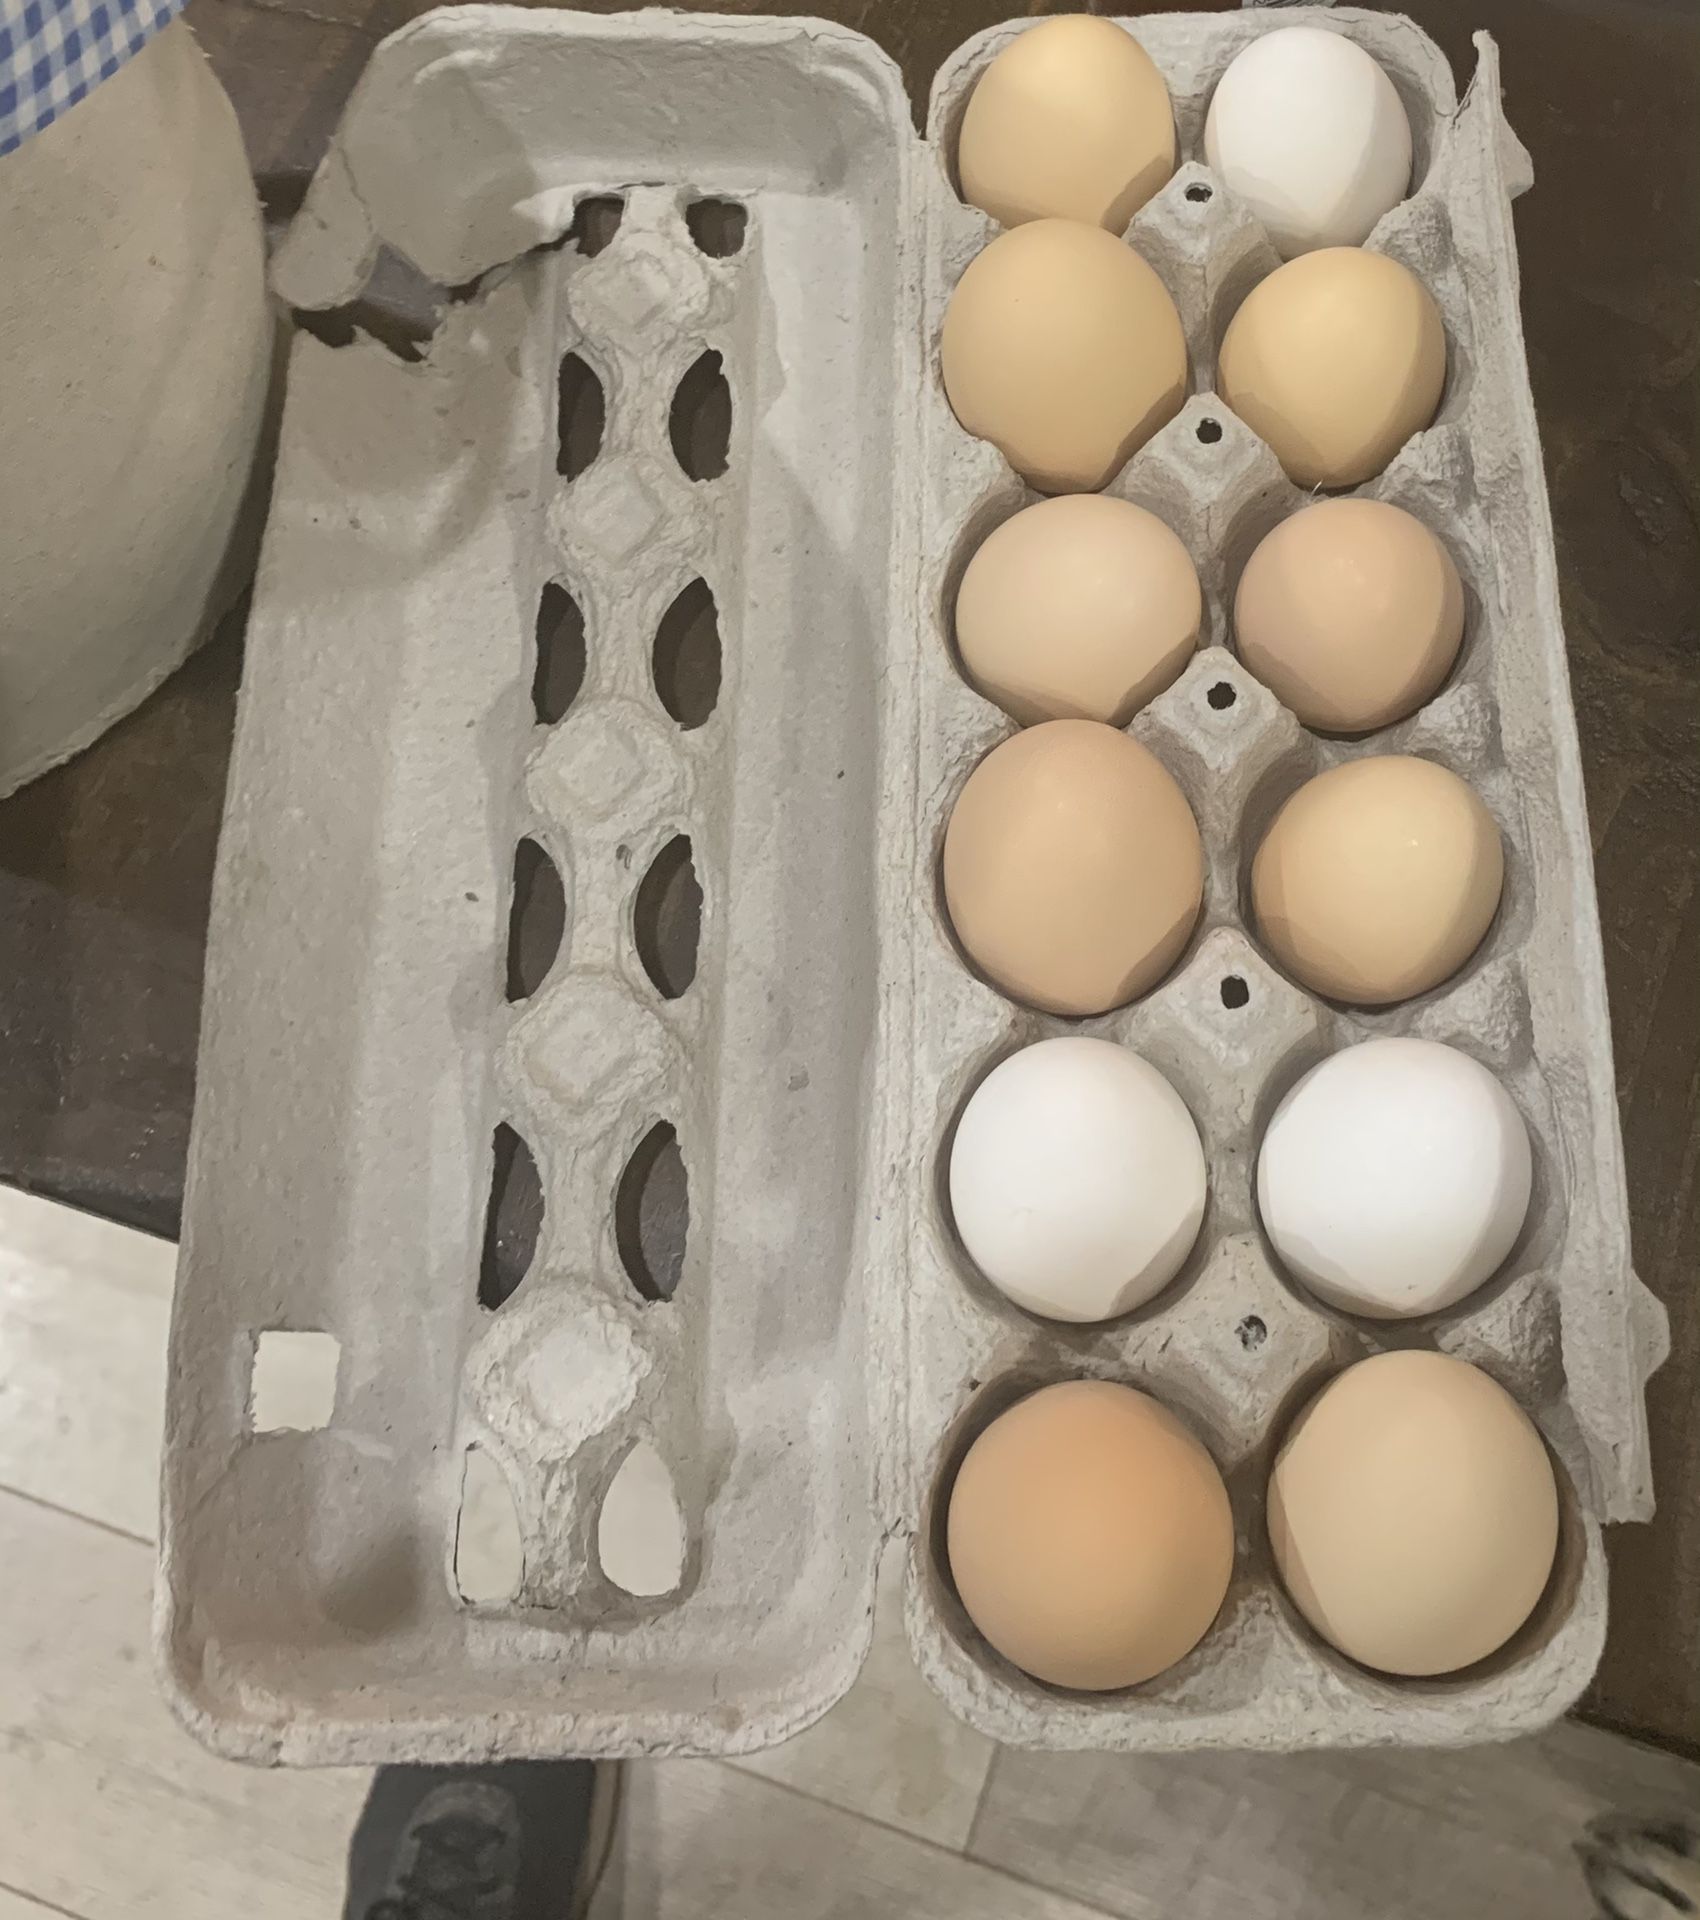 Farm fresh chicken eggs